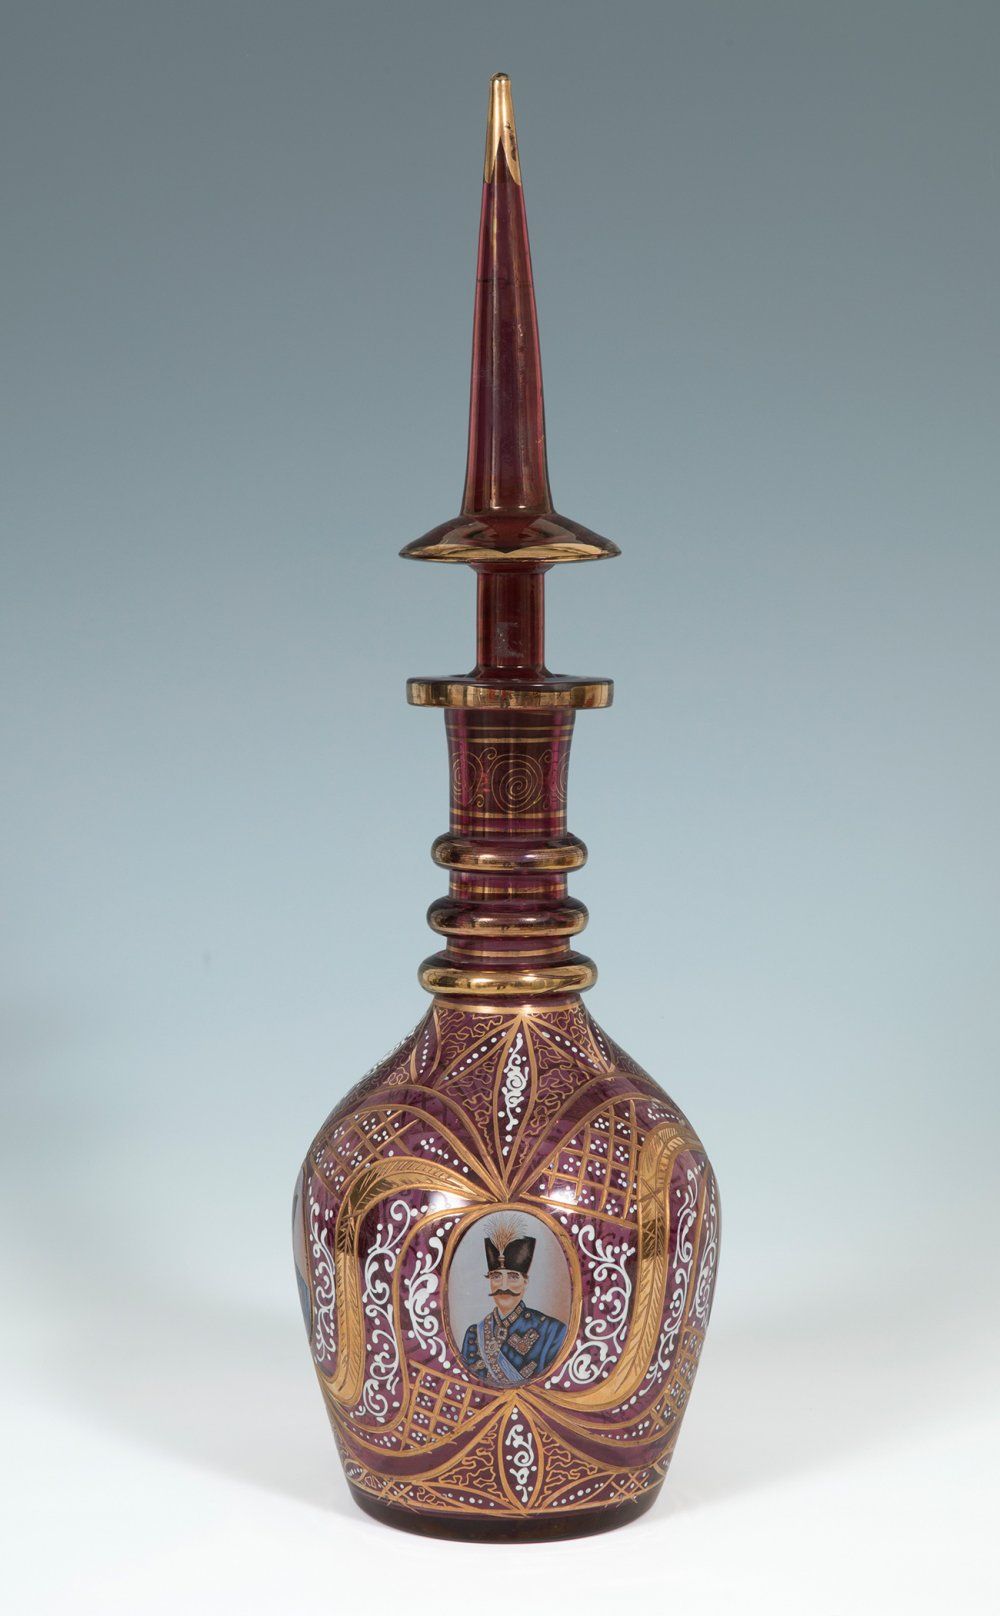 Null 滗水器；波西米亚，约 1900 年。 

搪瓷镀金玻璃。 

镀金处有缺损。

尺寸：60 x 18 x 18 厘米：60 x 18 x 18 厘米。&hellip;